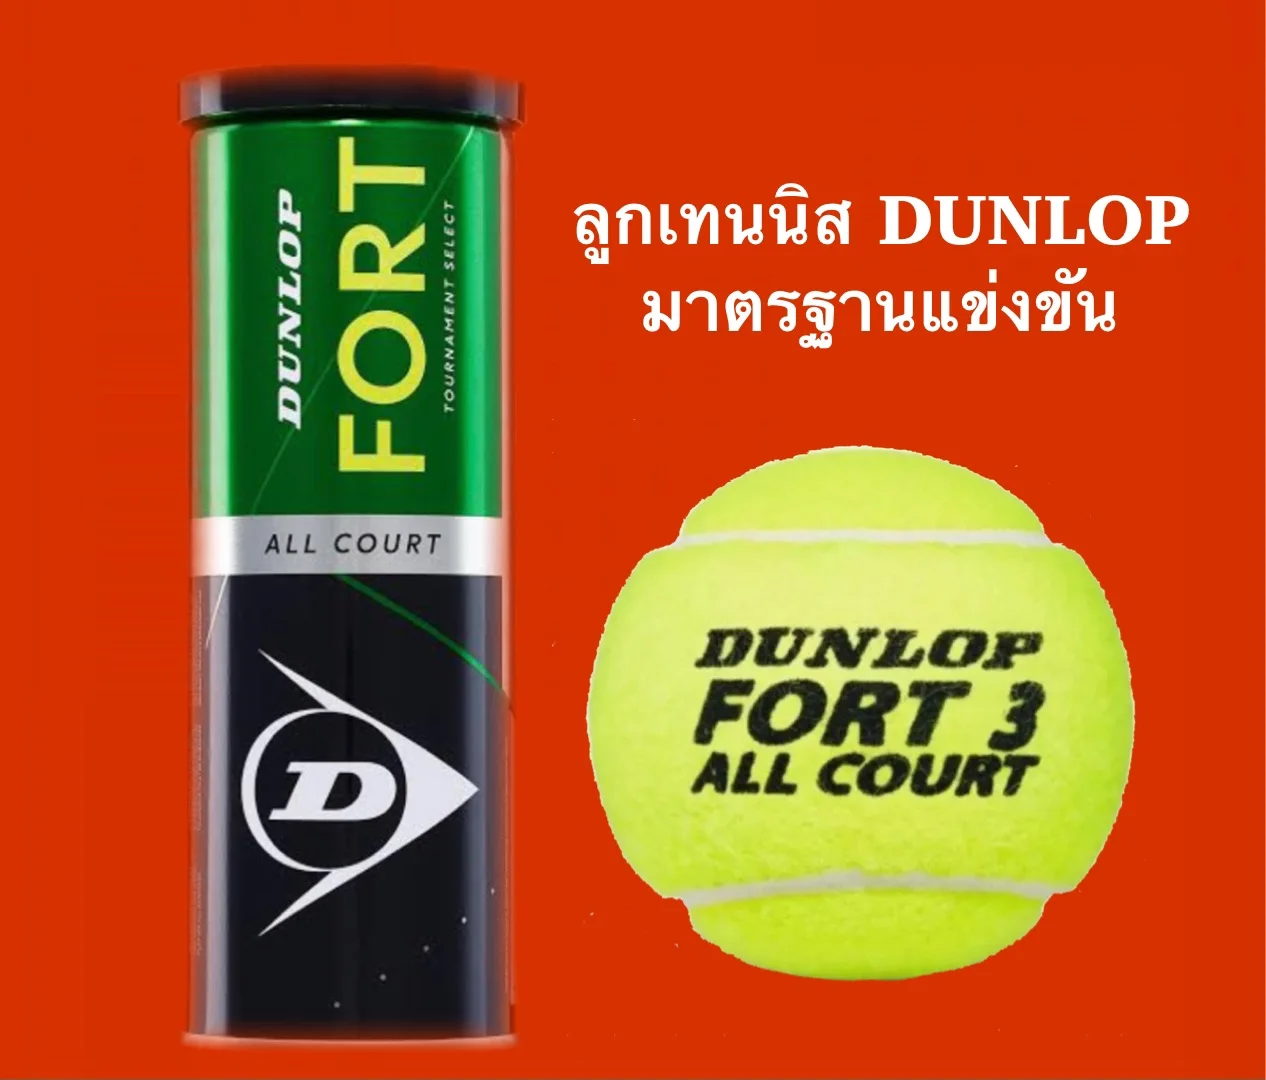 Tennis ball Dunlop Fort all court (1 can/3balls) OFFICIAL BALL ลูกเทนนิส คุณภาพมาตรฐานการแข่งขัน เหมาะสำหรับใช้ฝึกซ้อมและแข่งขัน ขนหนานุ่มใช้ได้นาน รับประกันของแท้ Made in the philippines